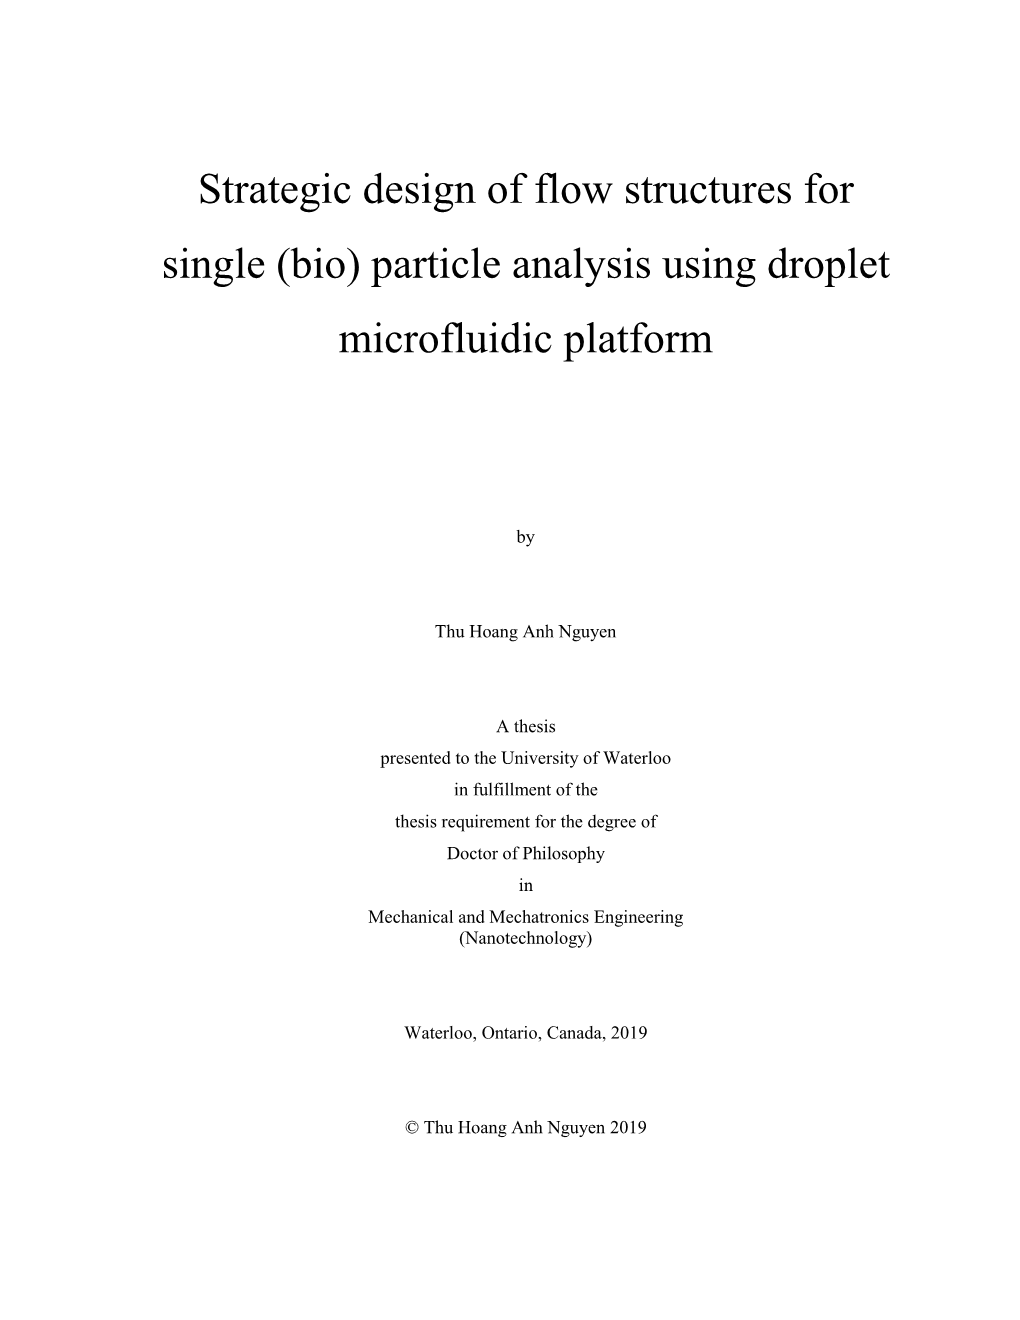 (Bio) Particle Analysis Using Droplet Microfluidic Platform